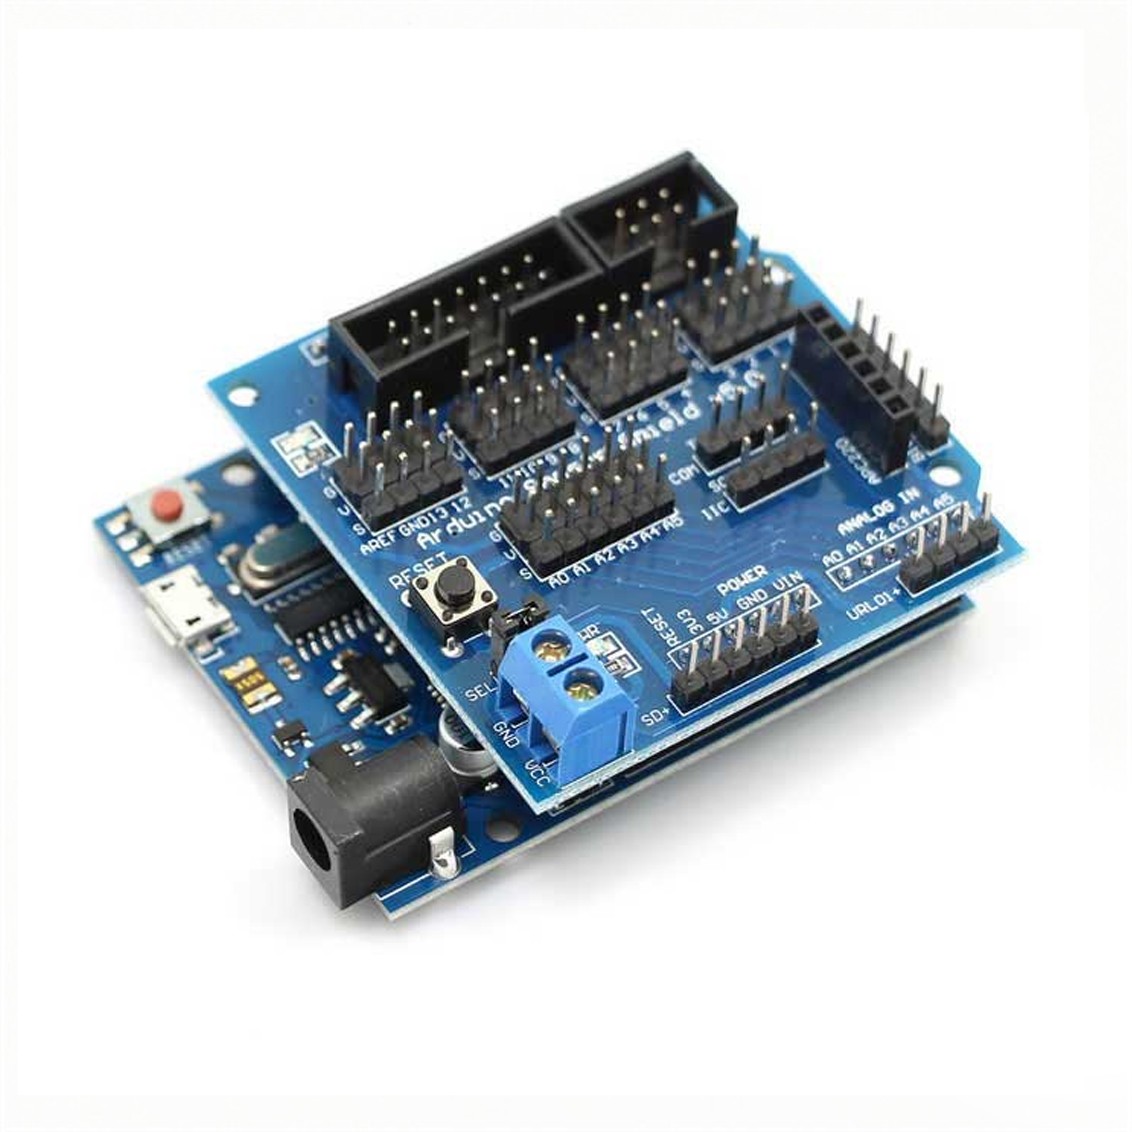 Шилд. Плата расширения для Arduino uno. Шилд 5 для ардуино уно. Arduino Shield v5. Arduino r3 sensor Shield v5.0.